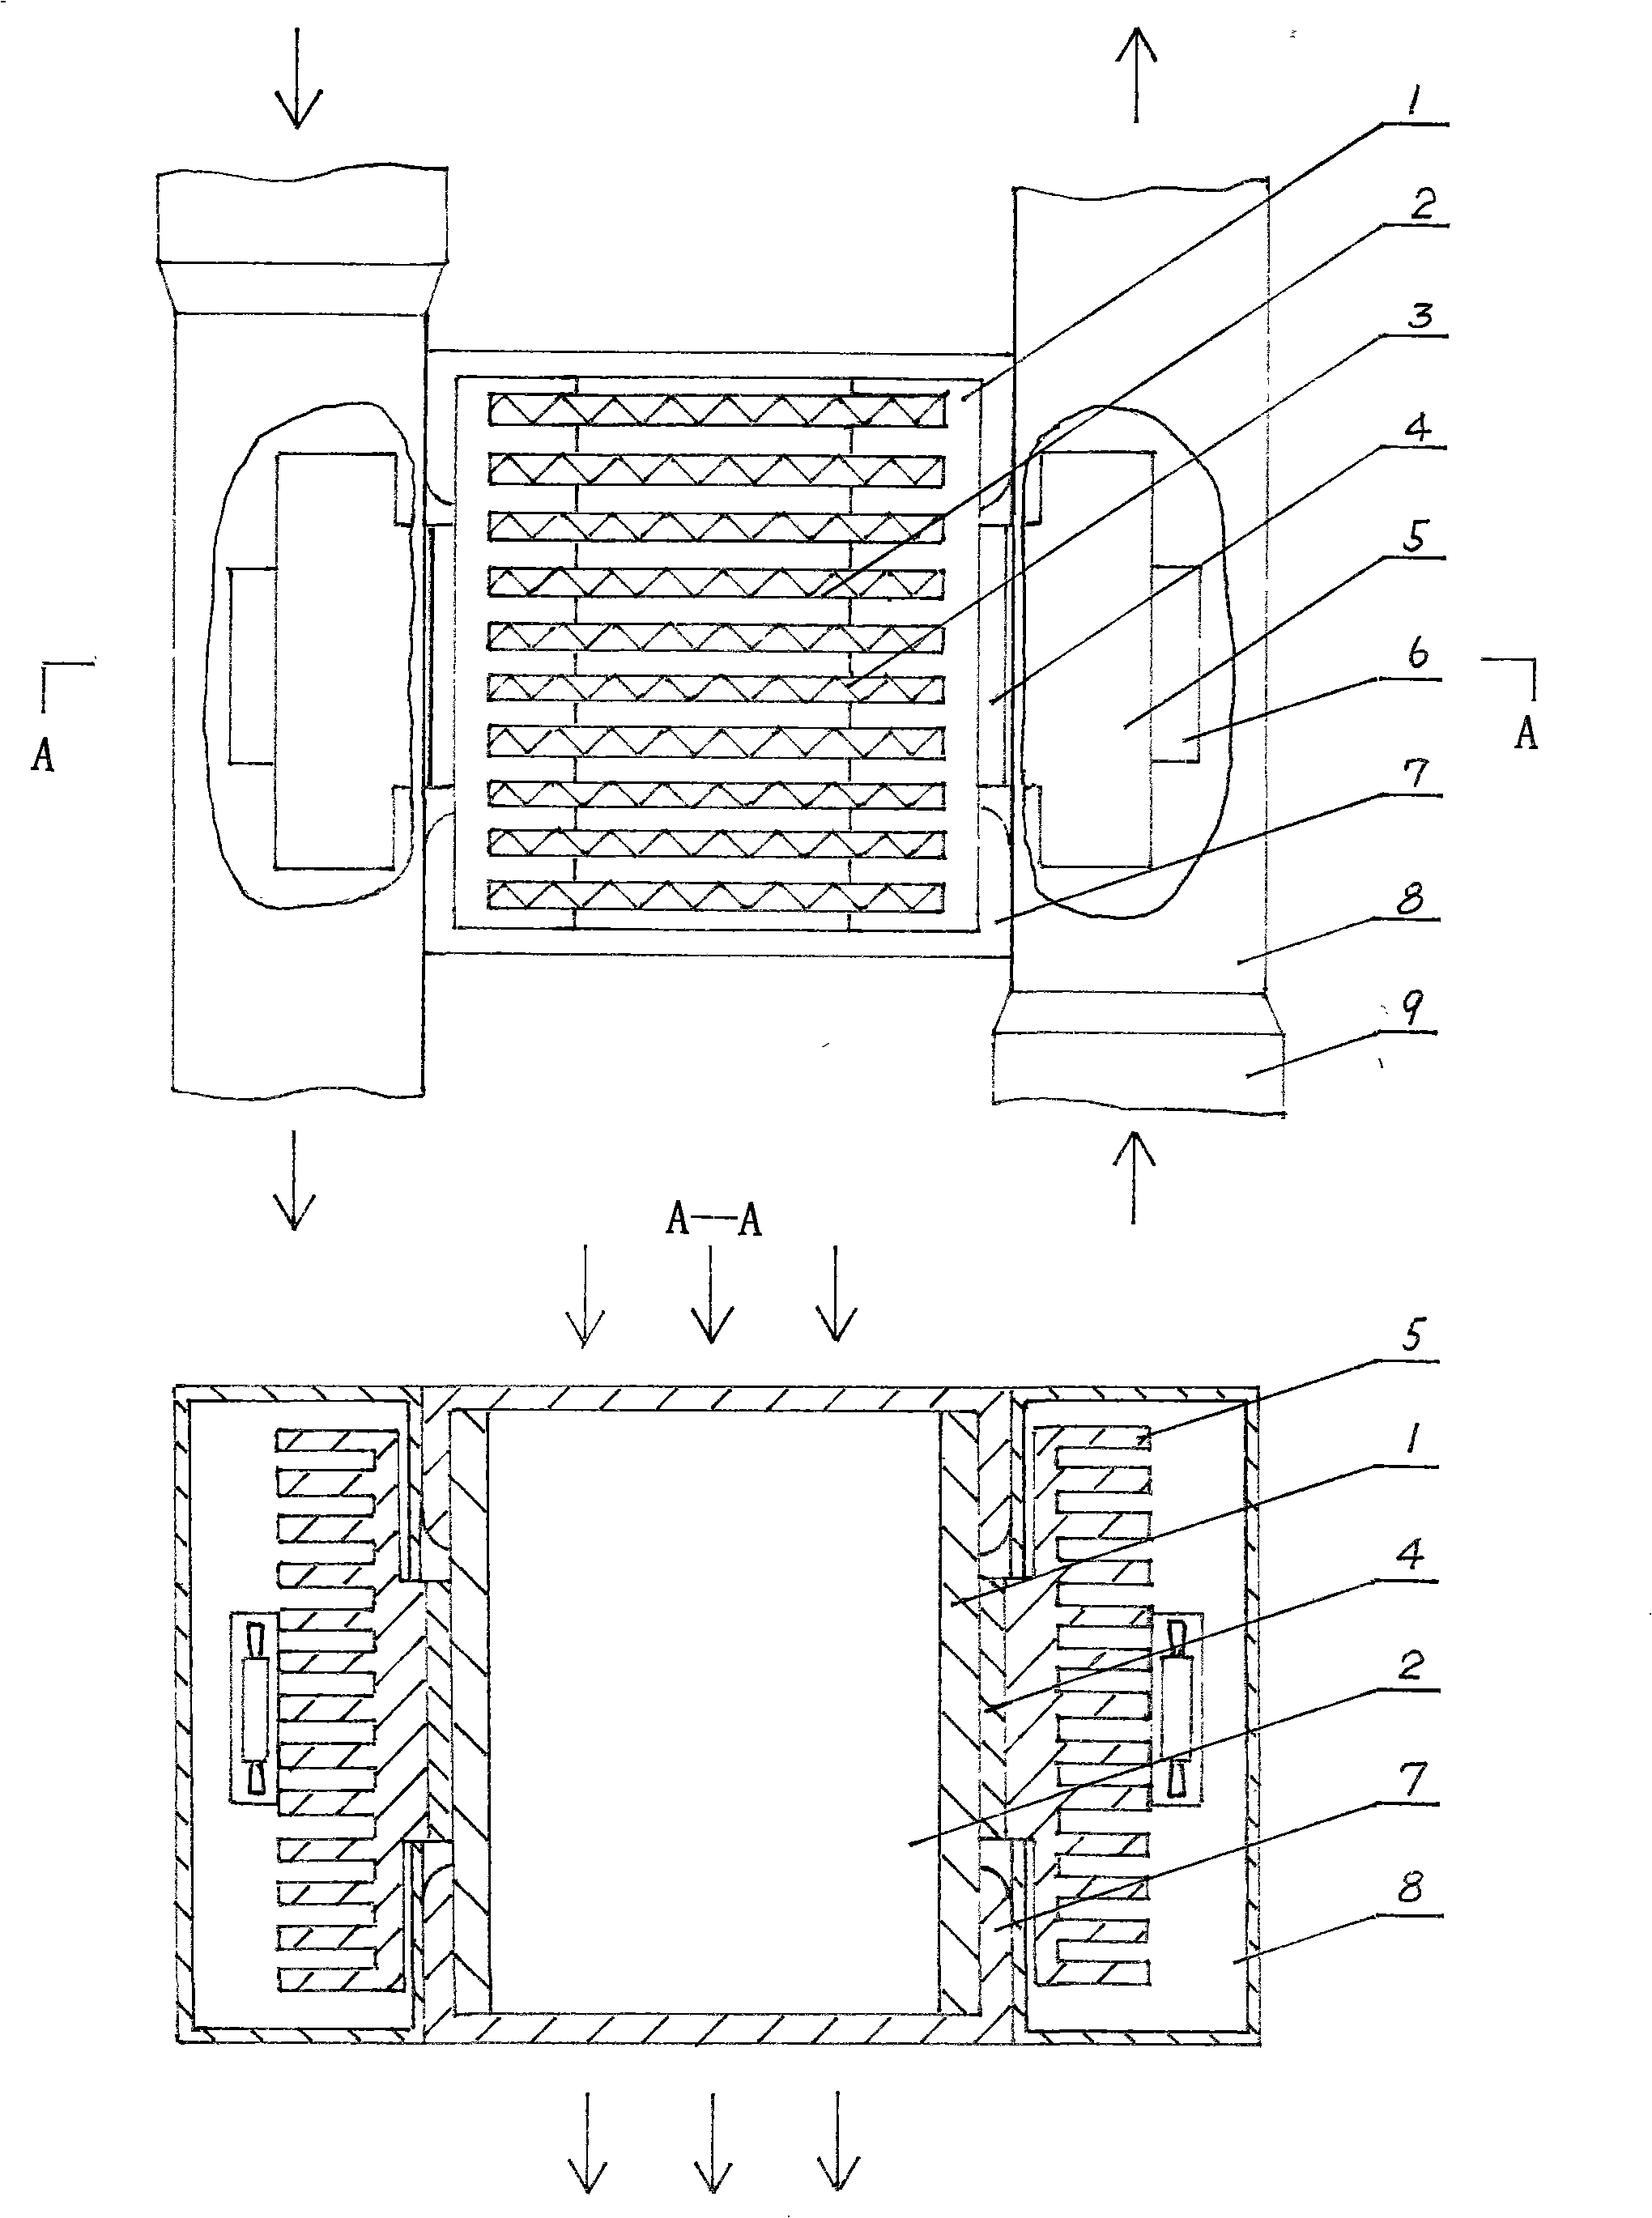 Semiconductor refrigerator